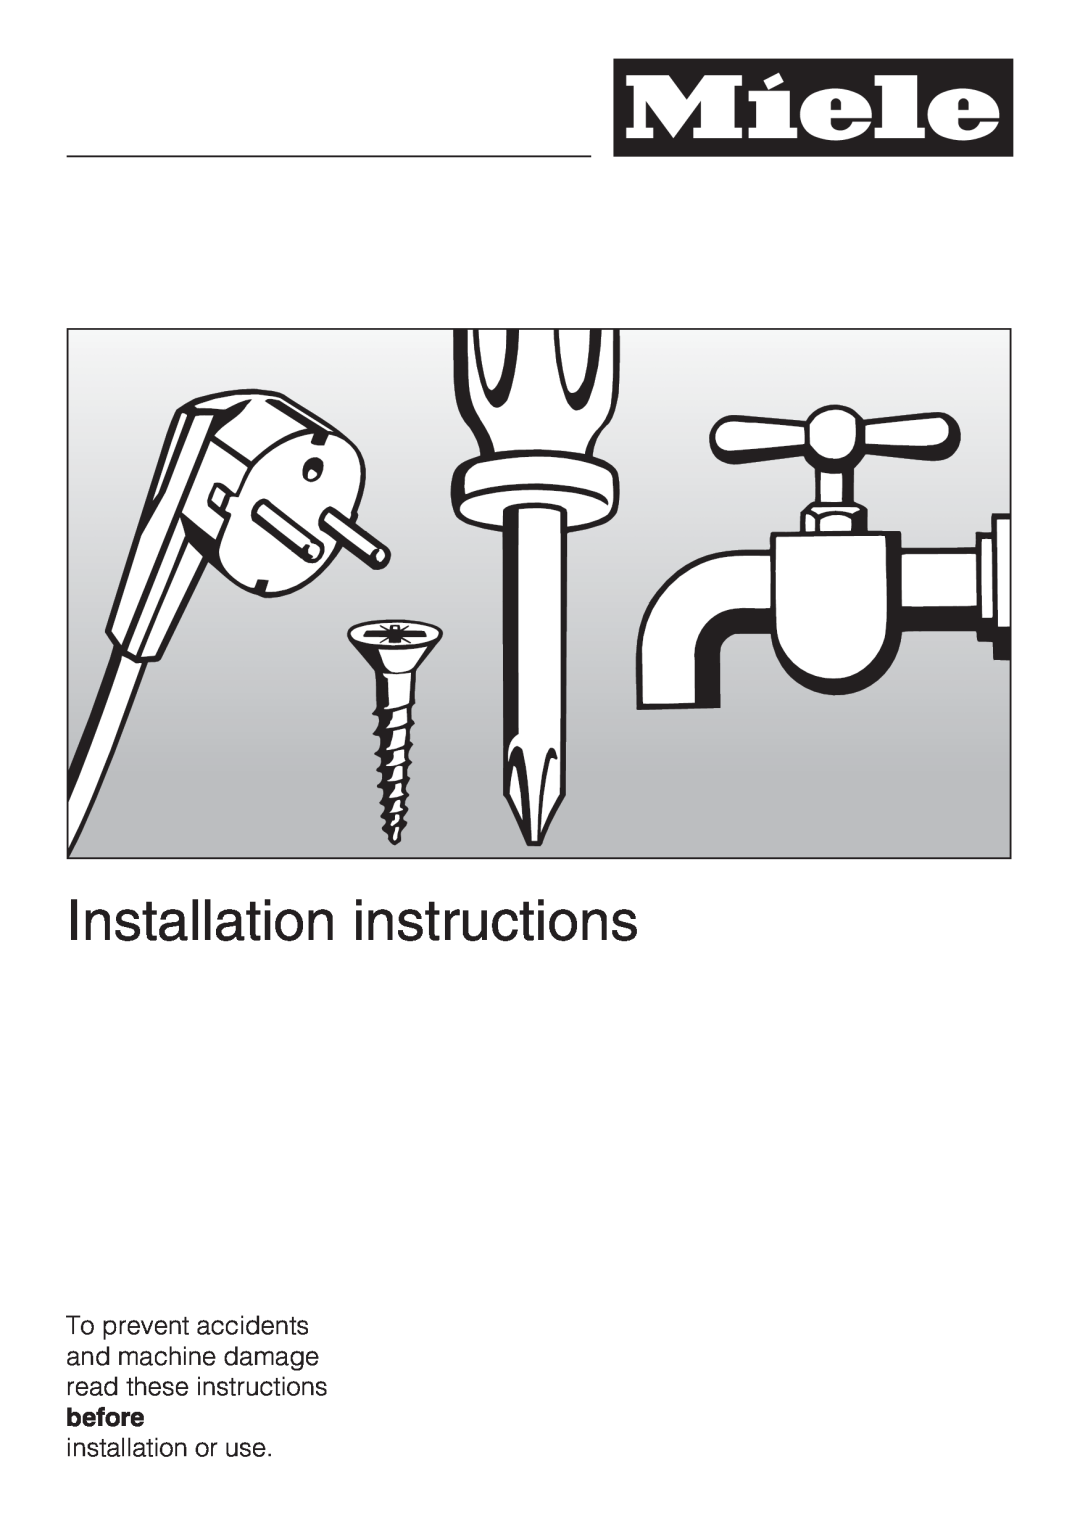 Miele KFN 9755 IDE installation instructions Installation instructions, installation or use 